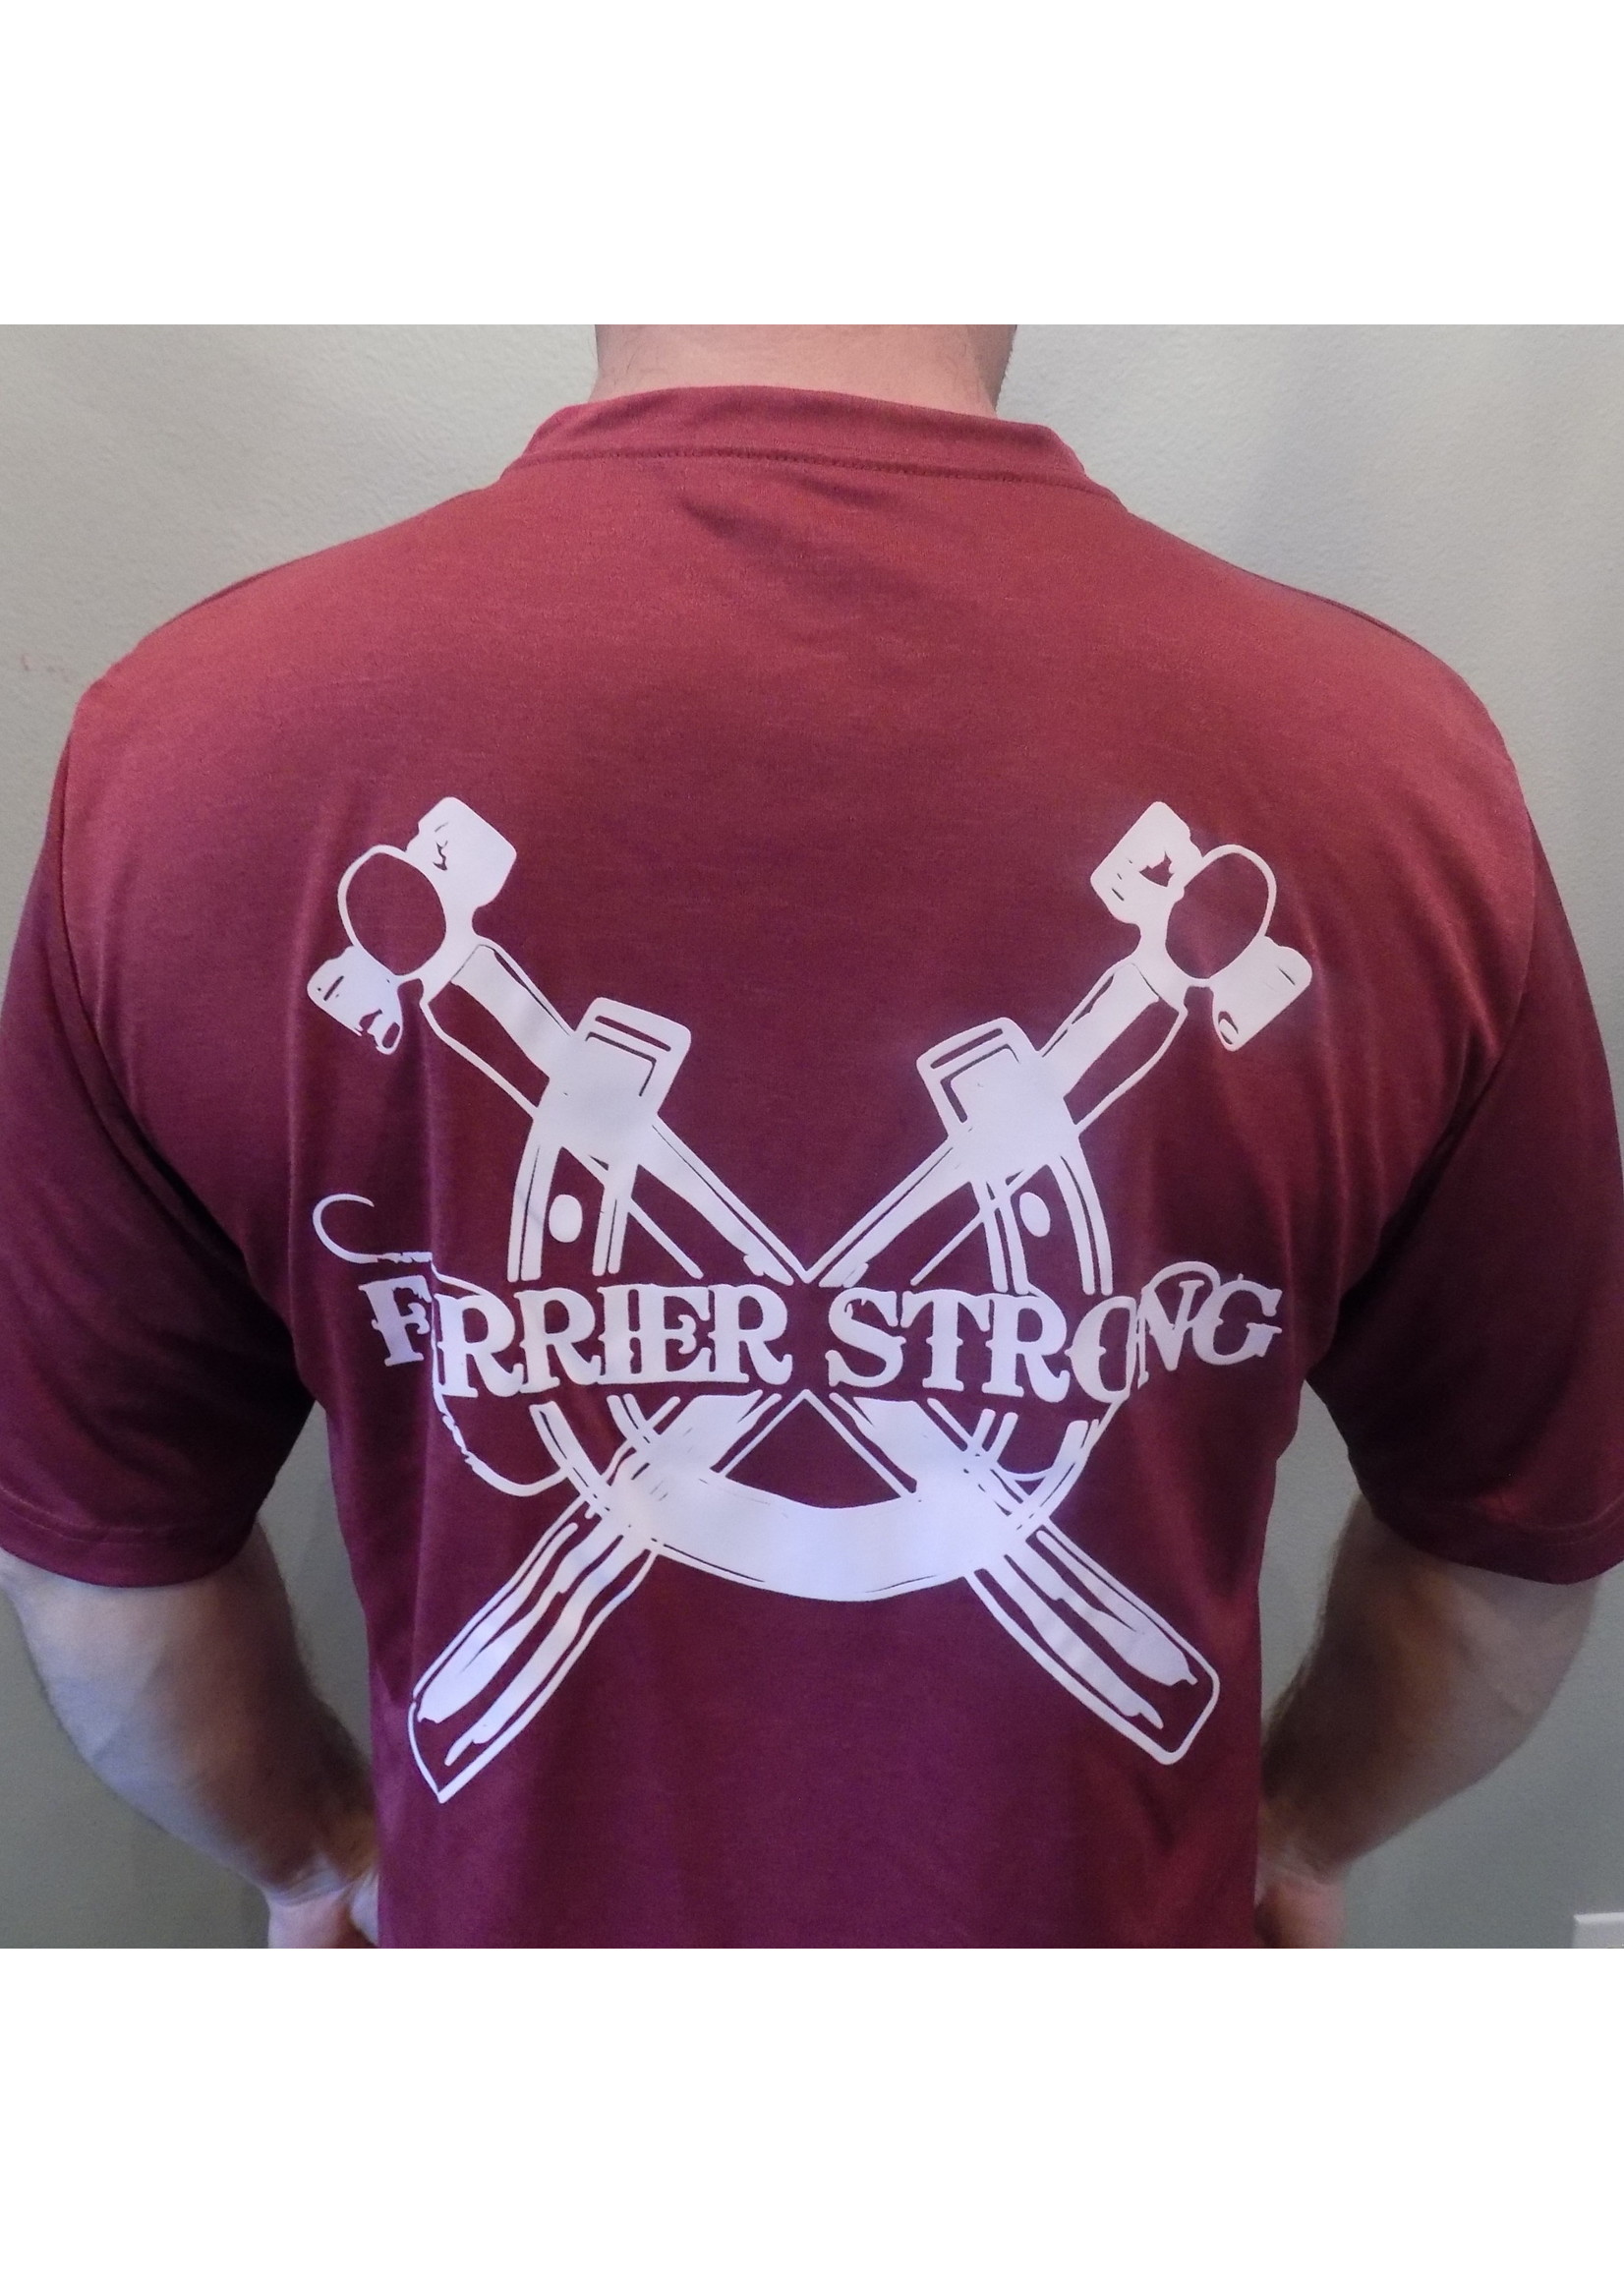 Farrier Strong Farrier Strong Dry Fit Tee Shirt